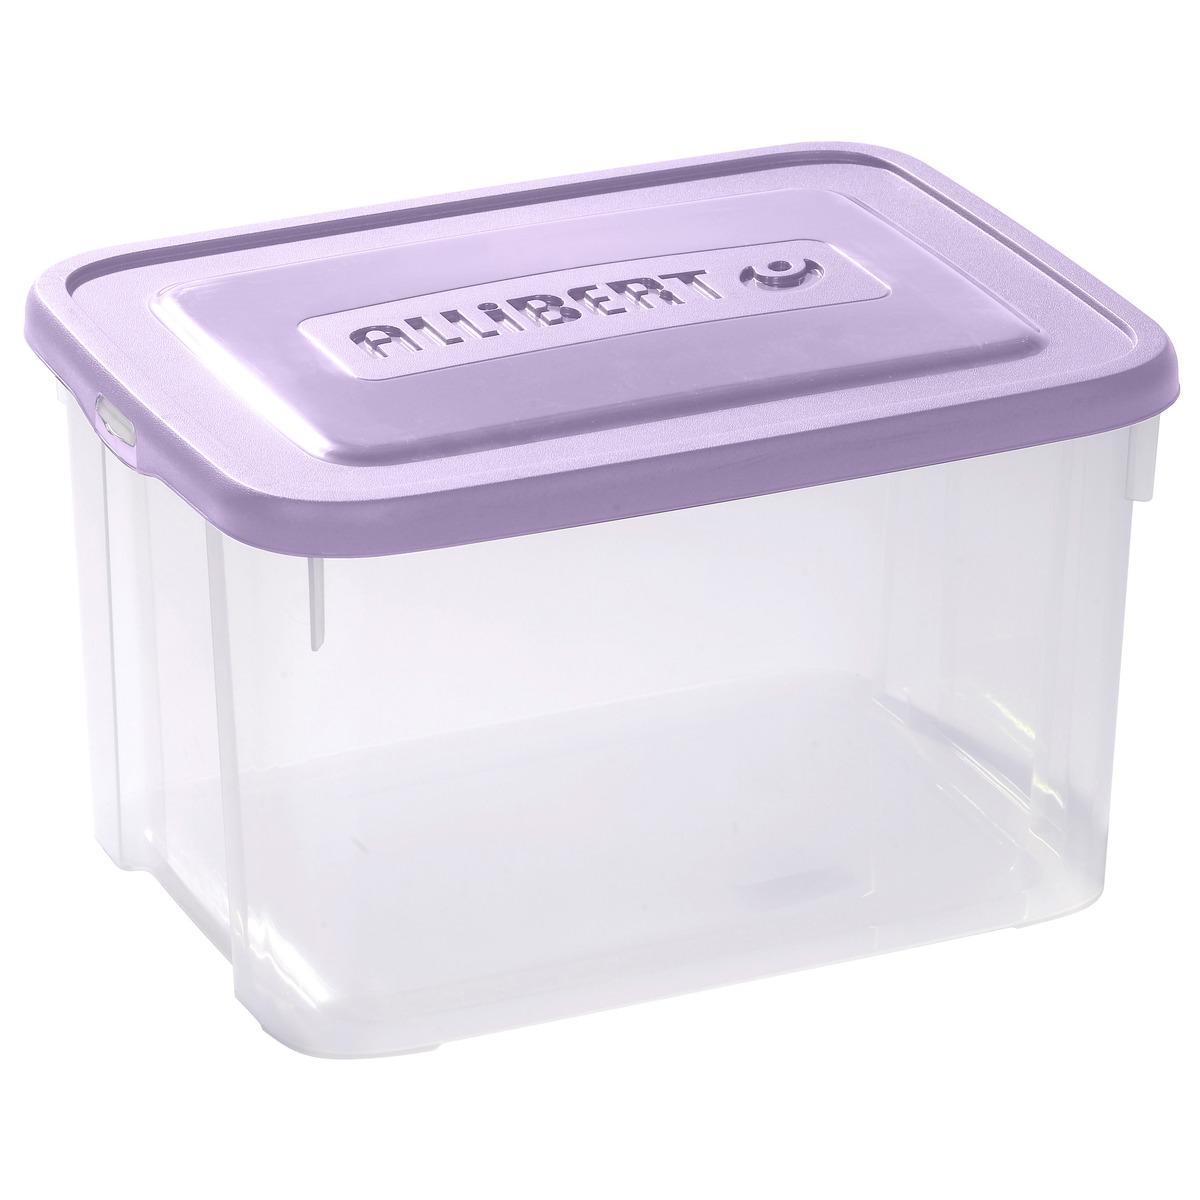 Box de rangement 20 litres Allibert en plastique - violet, transparent